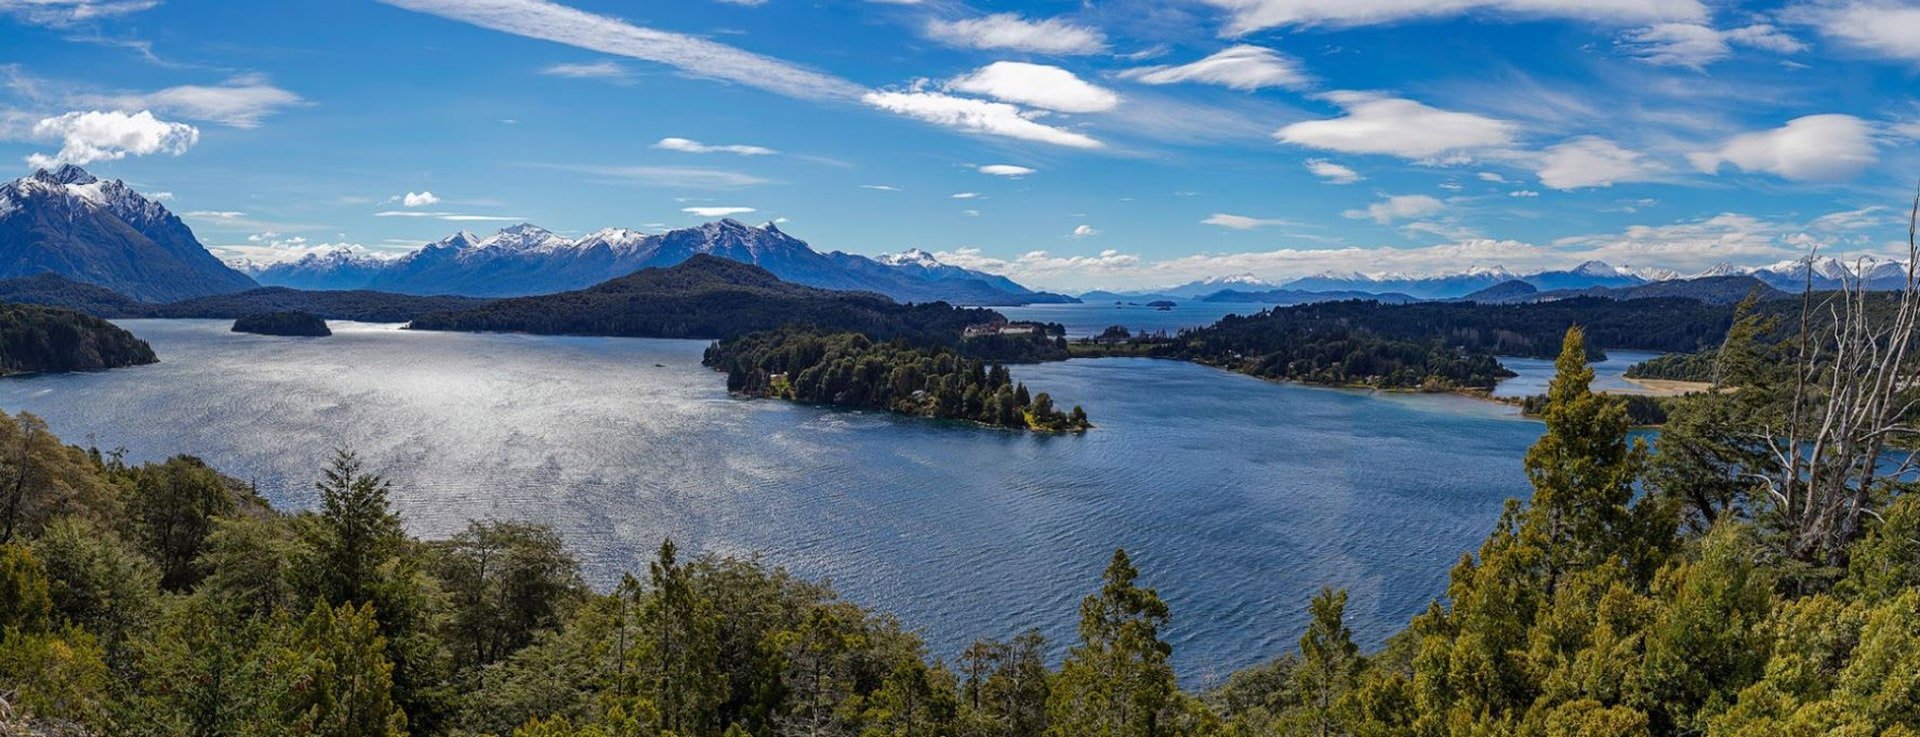 argentine patagonie route des 7 lacs bariloche nature paysage immersion panorama parc national montagne cordillère andes